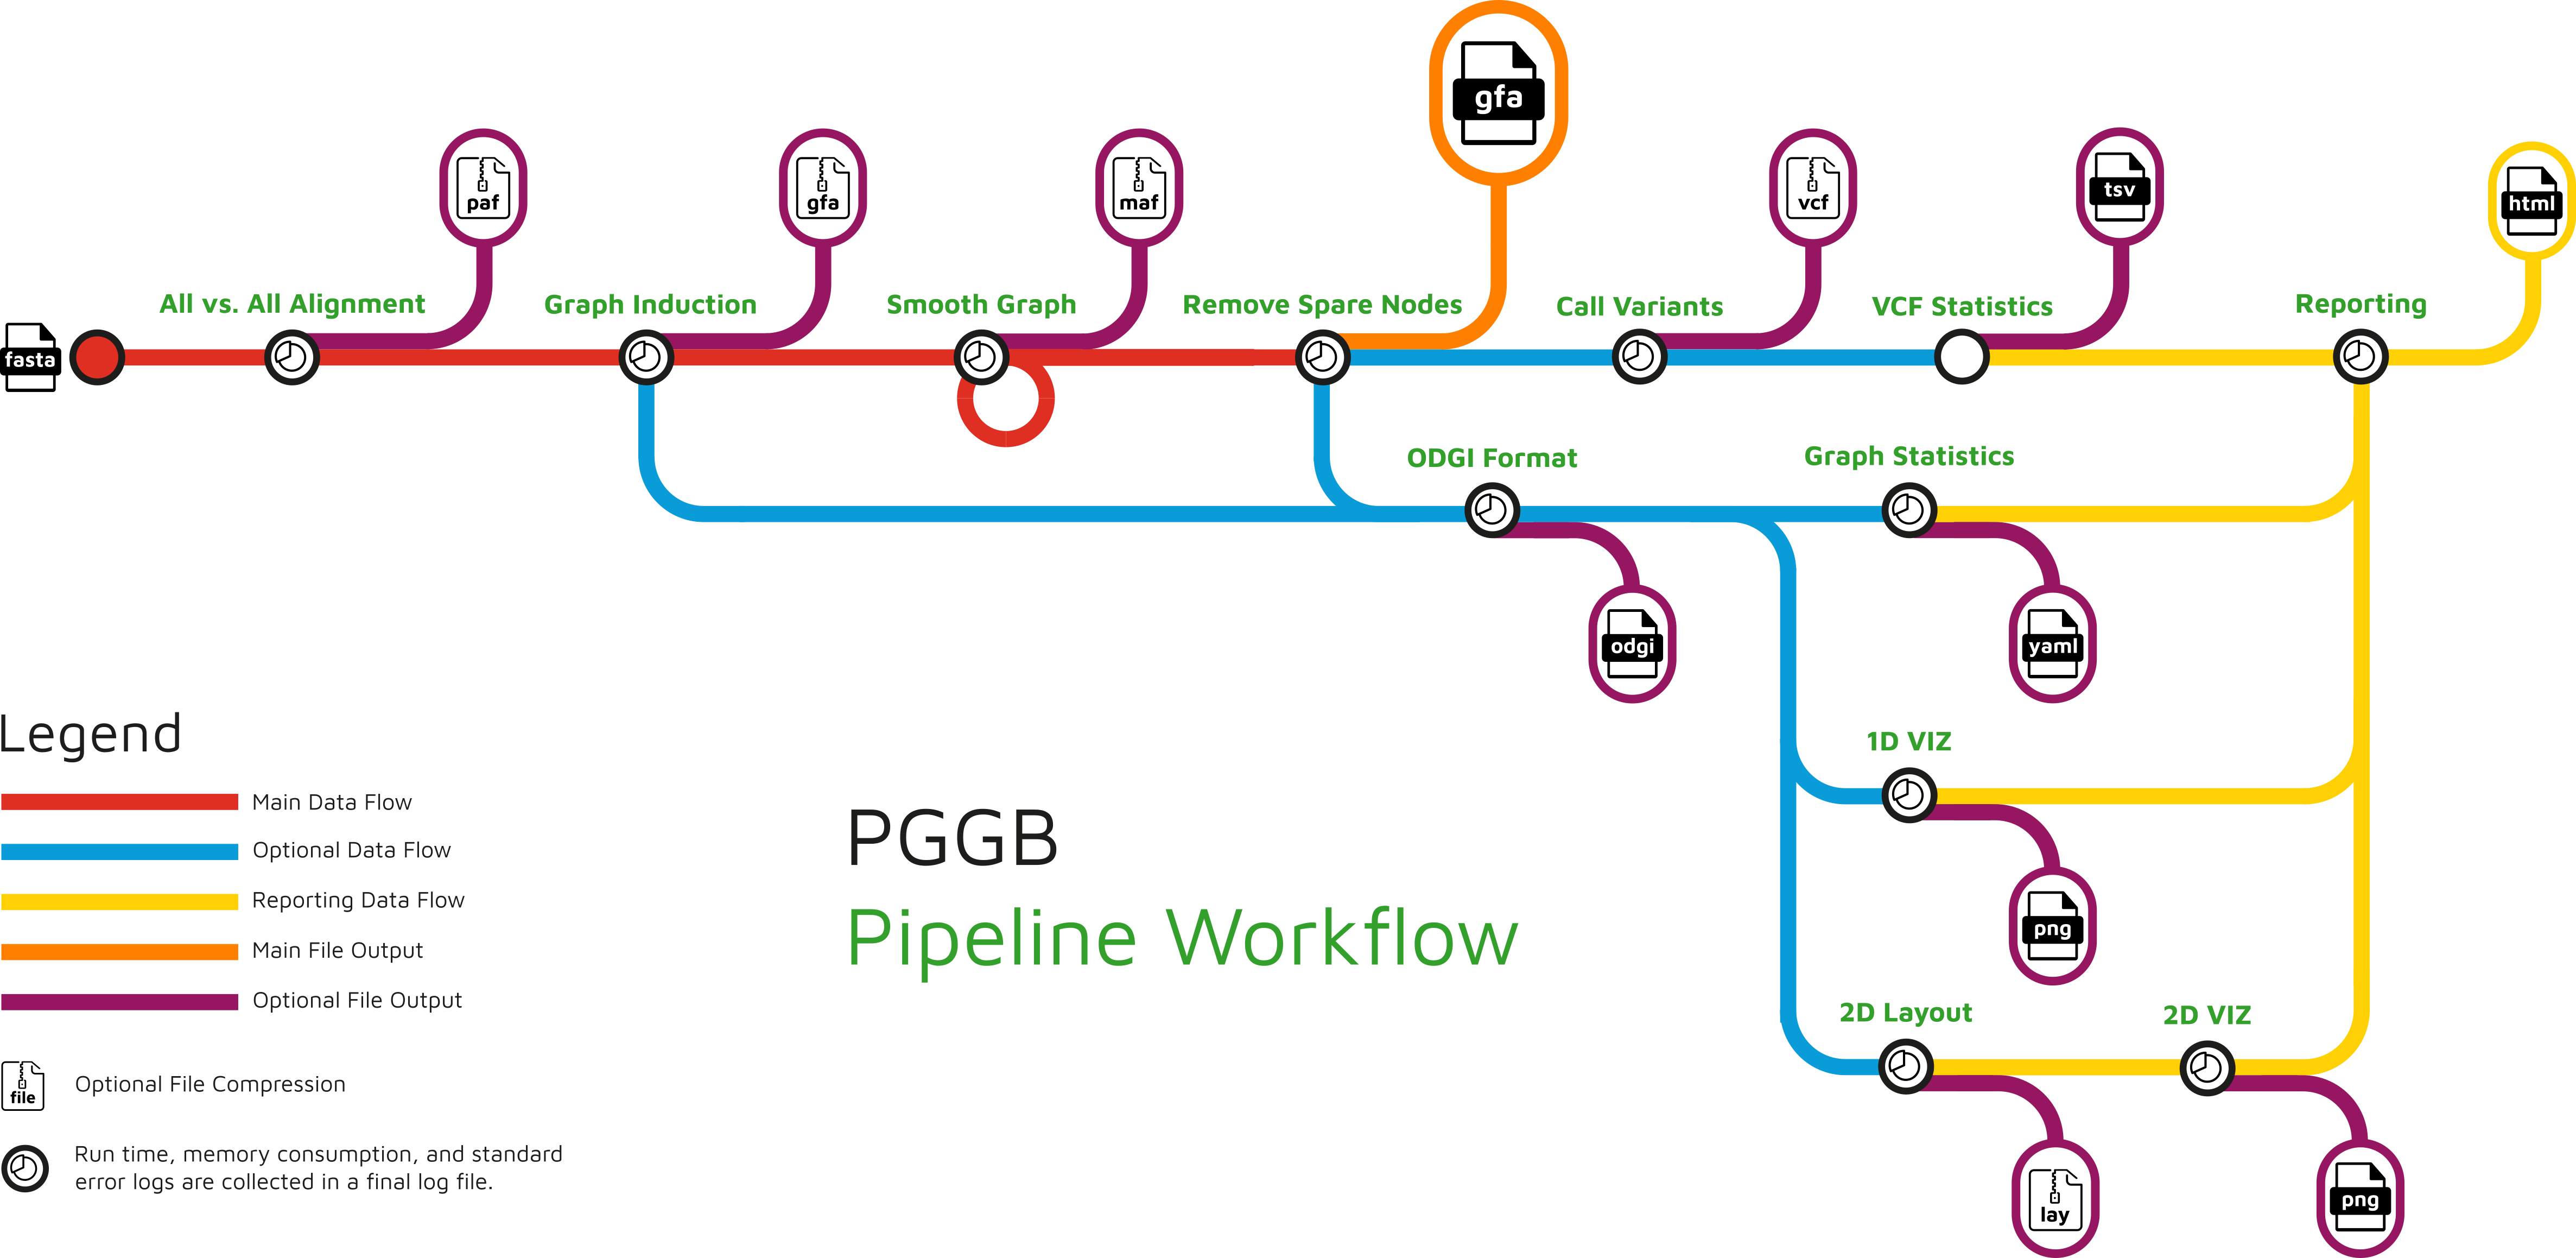 _images/pggb-flow-diagram.png